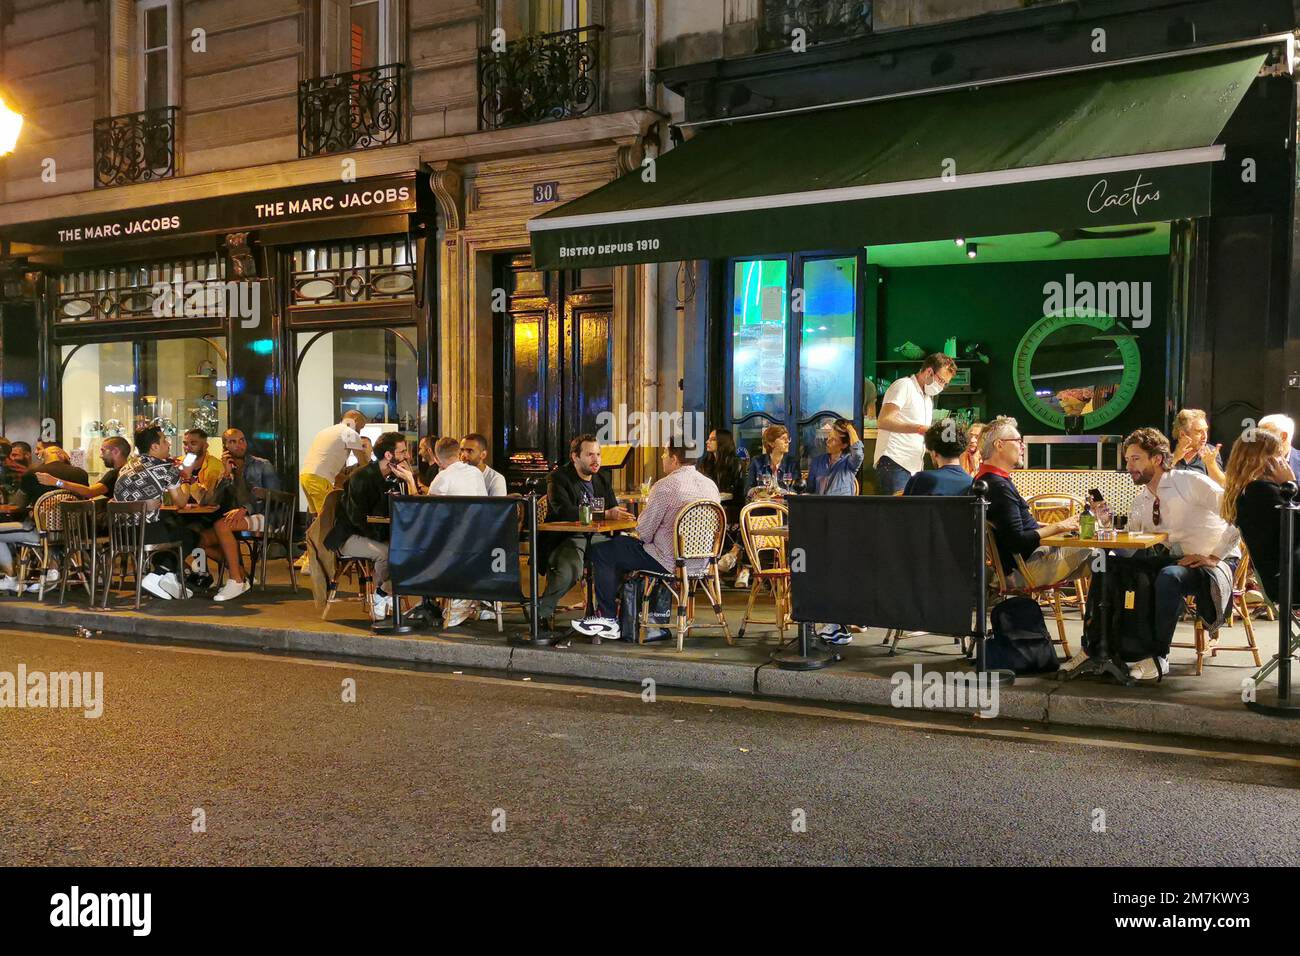 Frankreich, Paris, Nachtlokale in der berühmten Rue Rivoli, 1. Arrondissement, typische Luxusstraße Foto © Fabio Mazzarella/Sintesi/Alamy Stock Photo Stockfoto